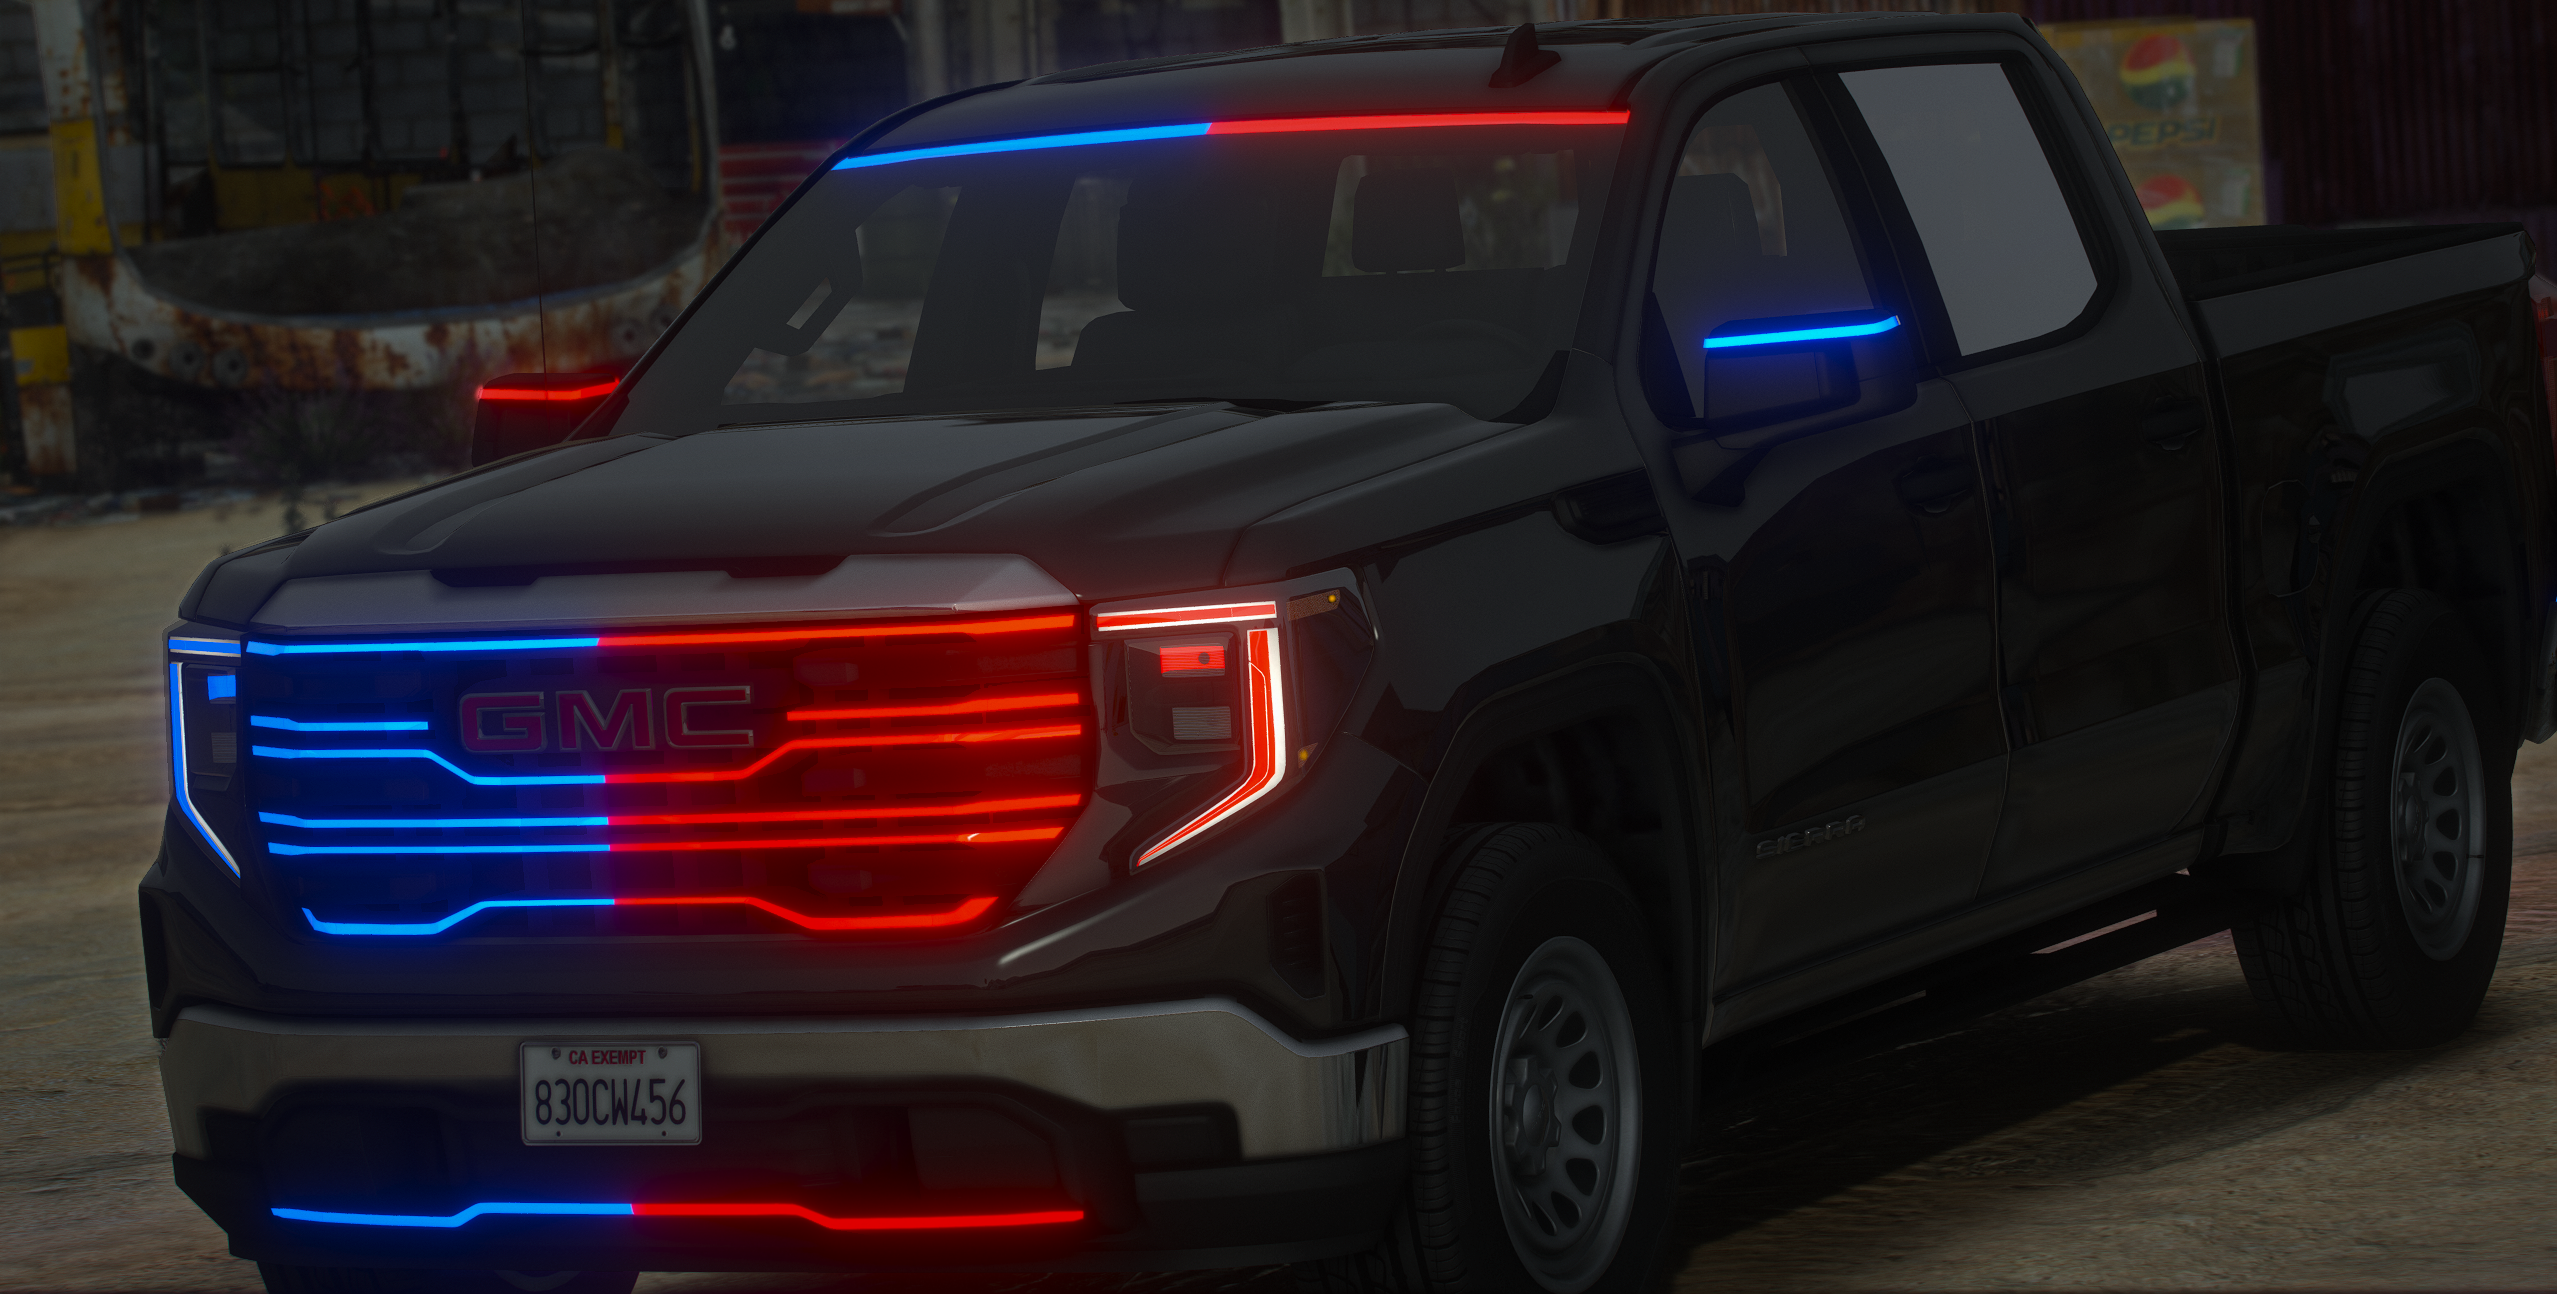 2022 GMC Sierra FiveM Police Vehicle